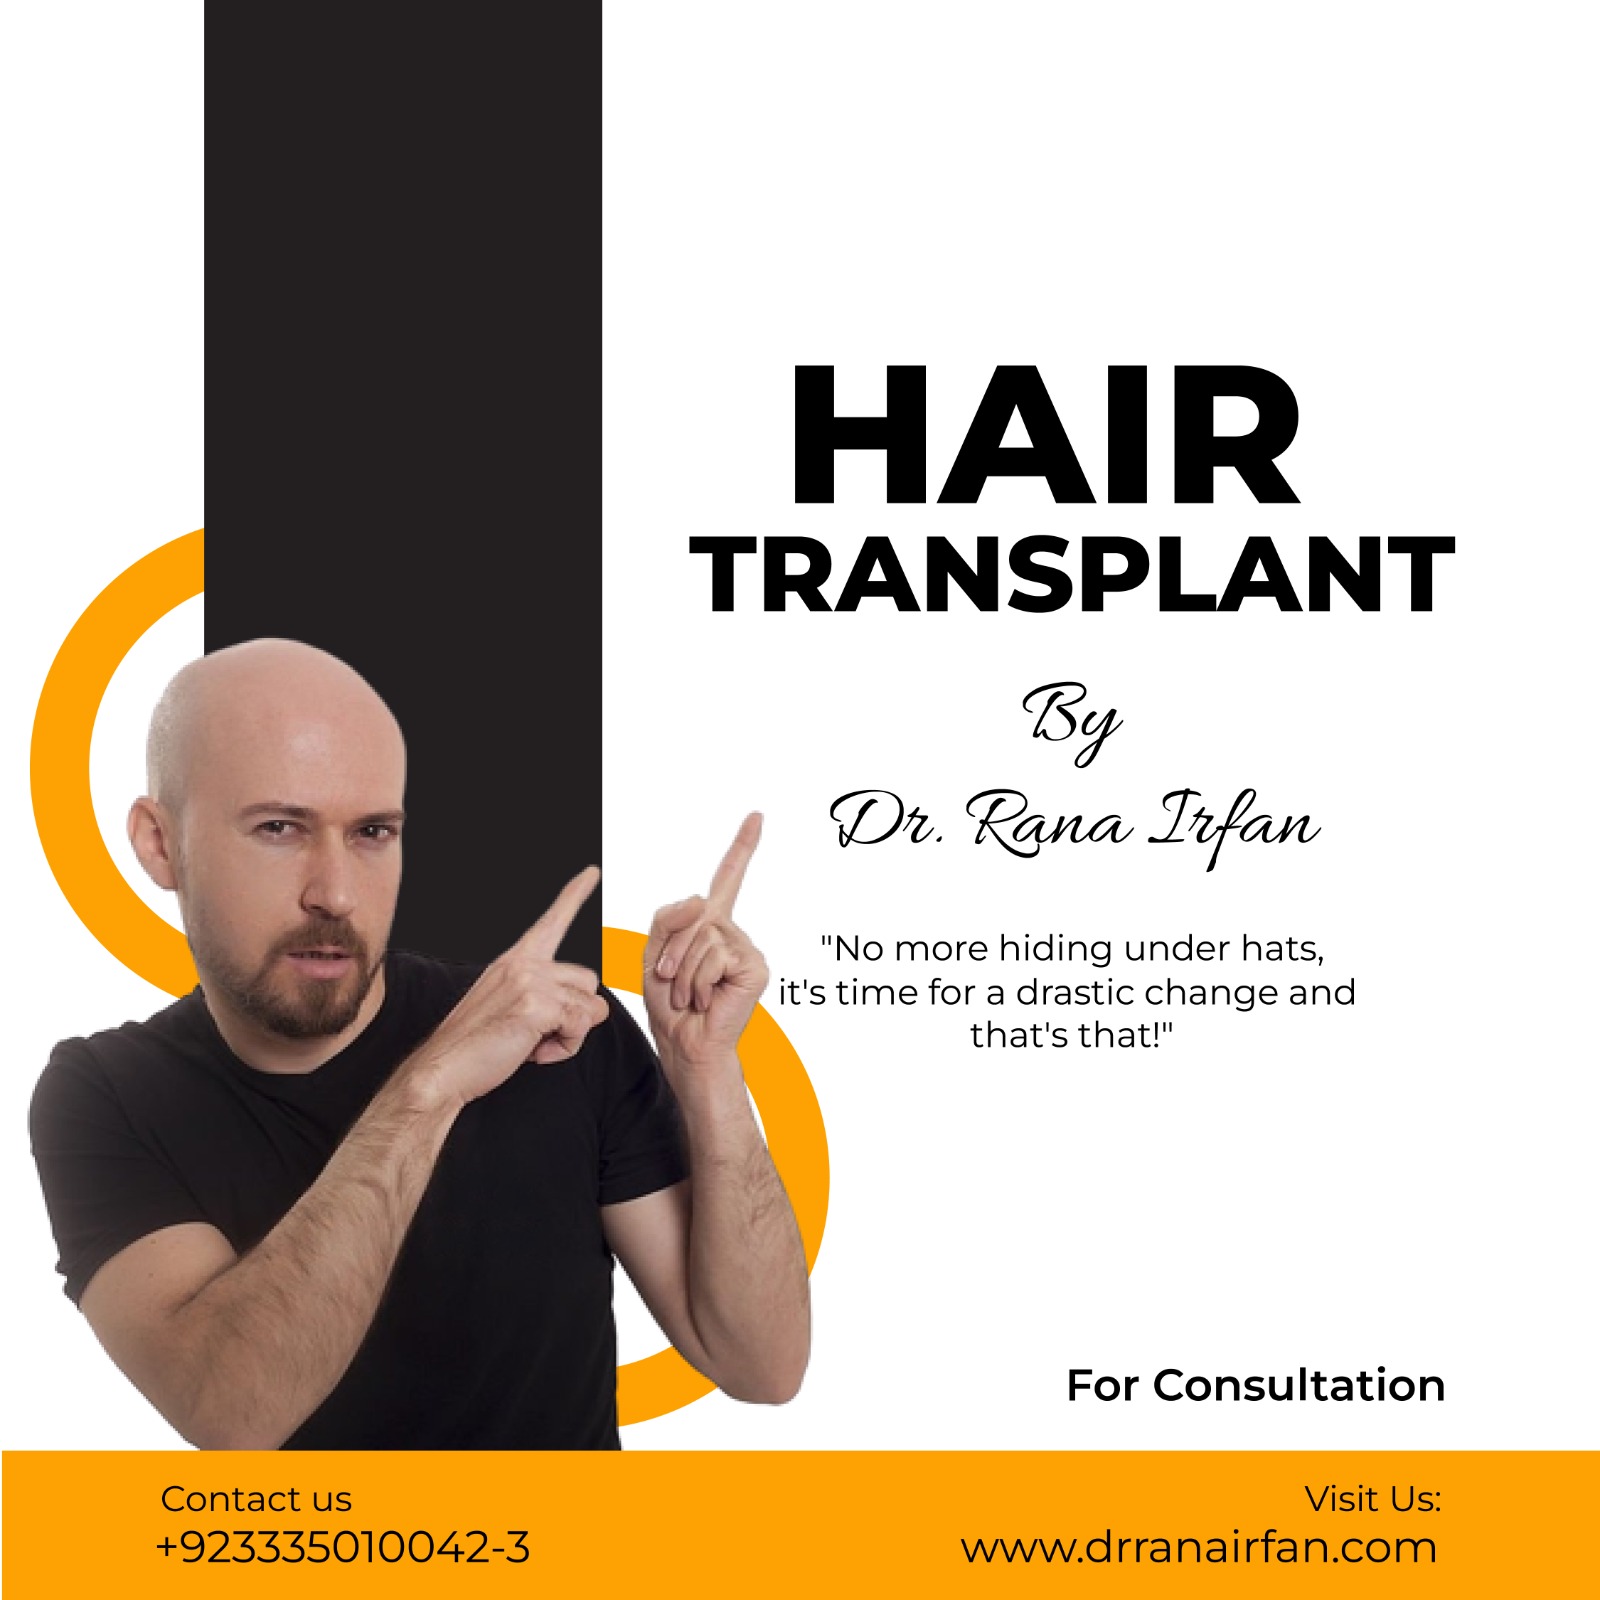 Hair transplant services at vagus Cosmetic IslamabadHealth and BeautyHealth Care ProductsEast DelhiShakarpur